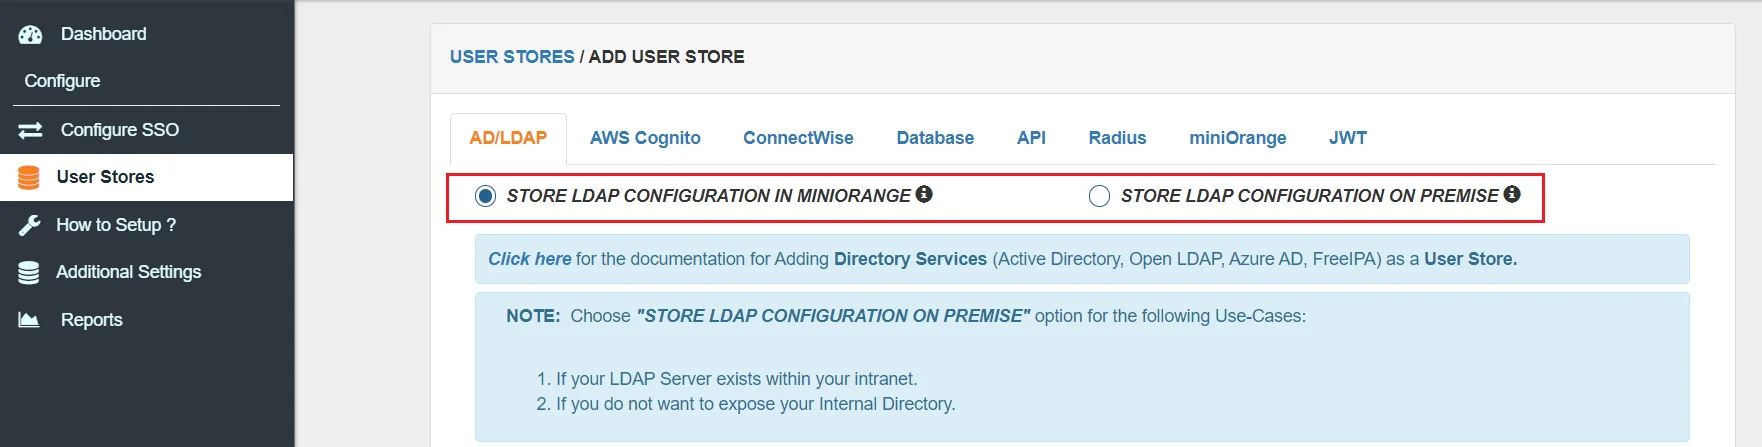 Shopify Active Directory (AD/LDAP) Integration navigate to ad/ldap tab